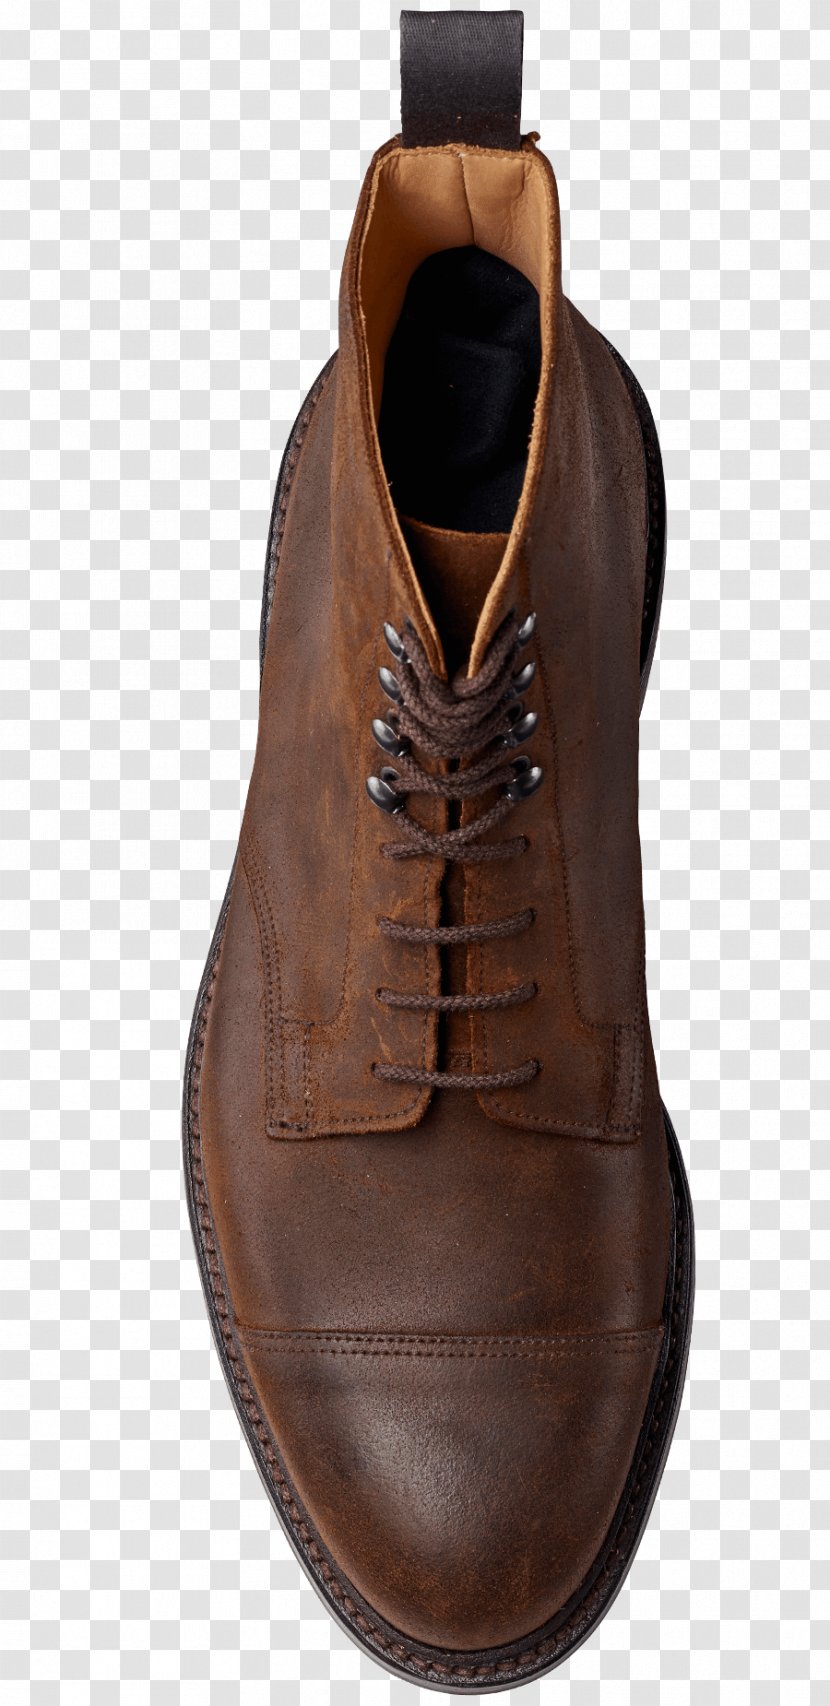 Shoe Boot Crockett & Jones Goodyear Welt Suede - Leather Transparent PNG